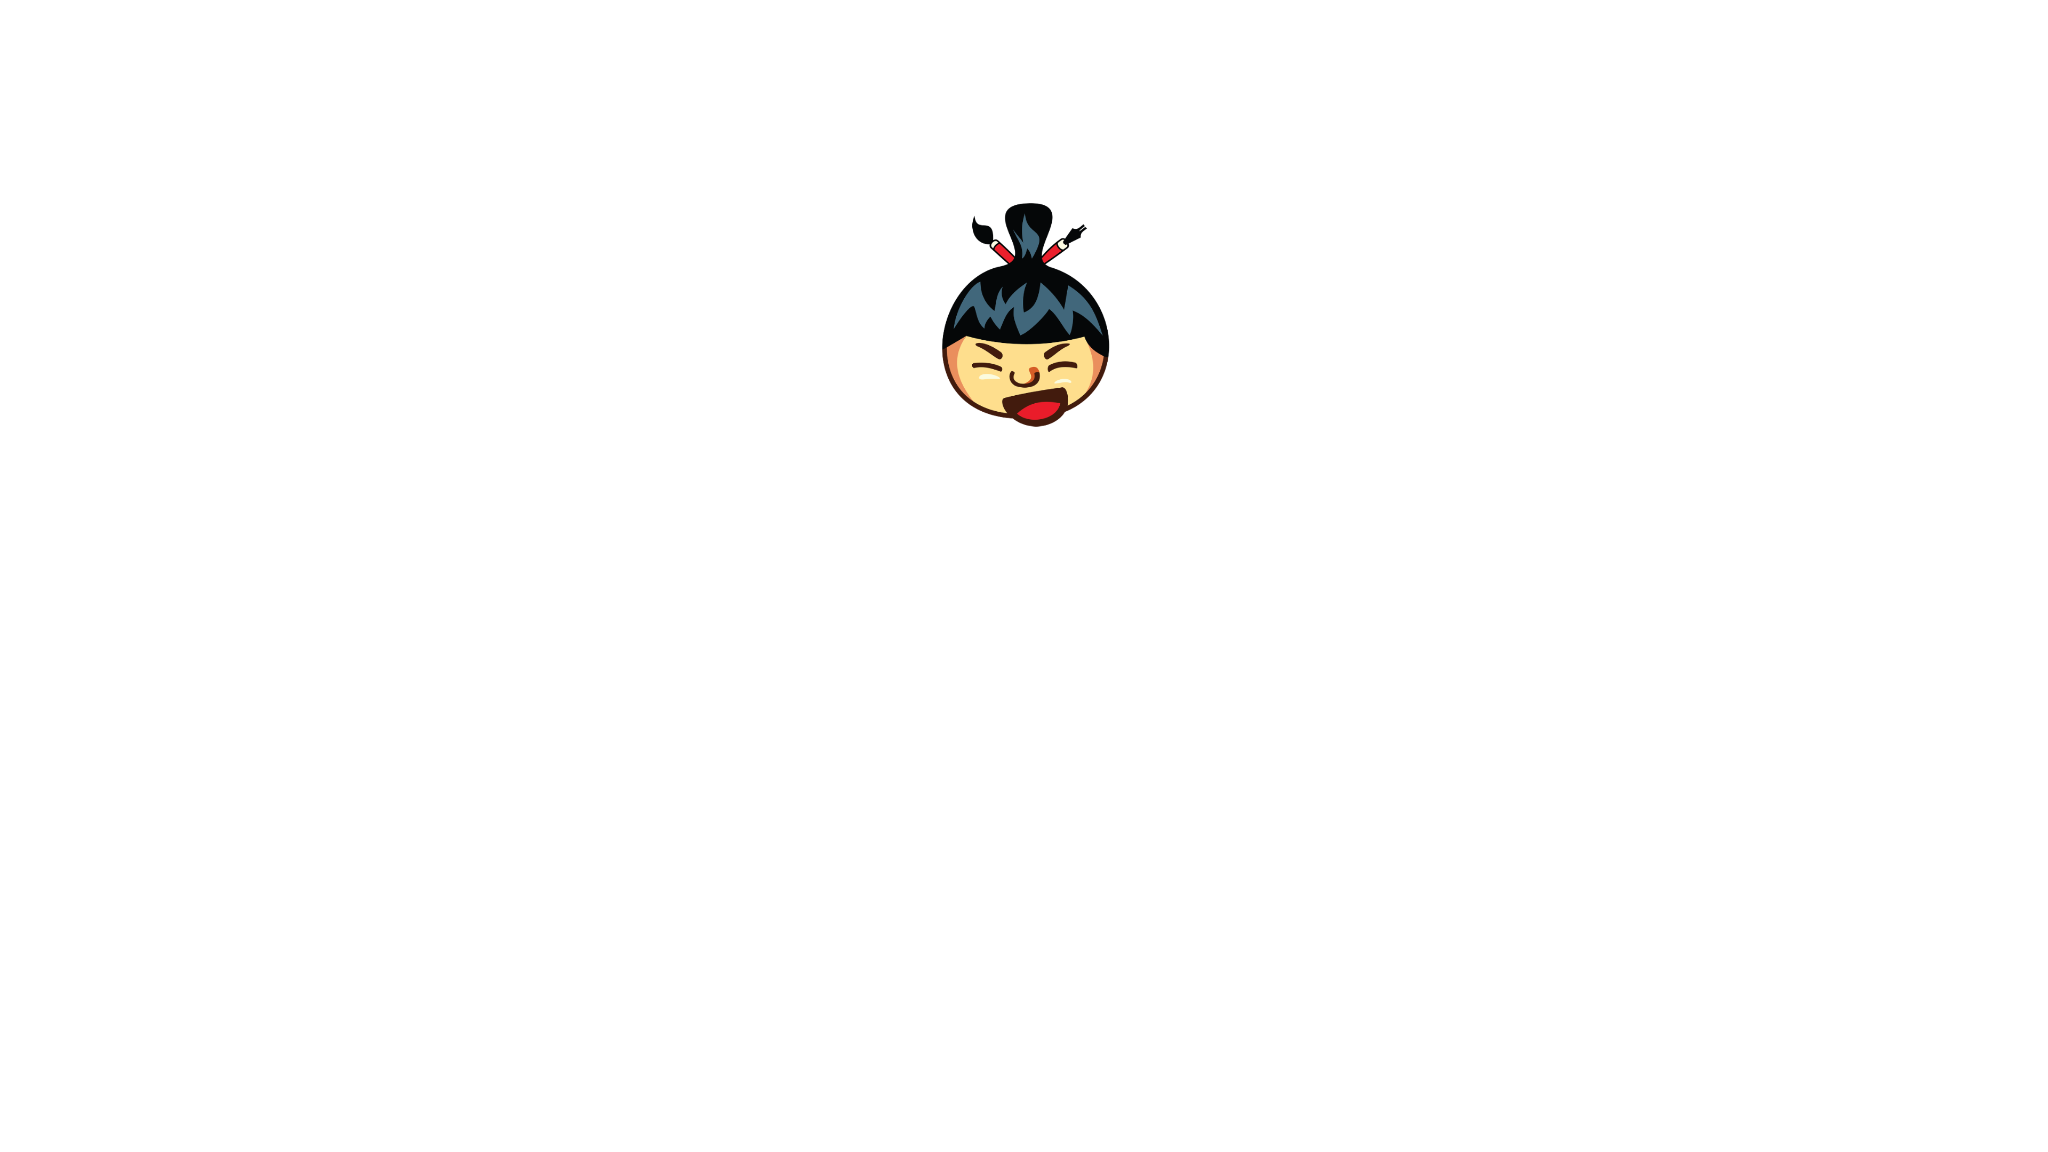 Sumo Video Intro - Lauri Koutaniemi 에 의해 생성됨 paint